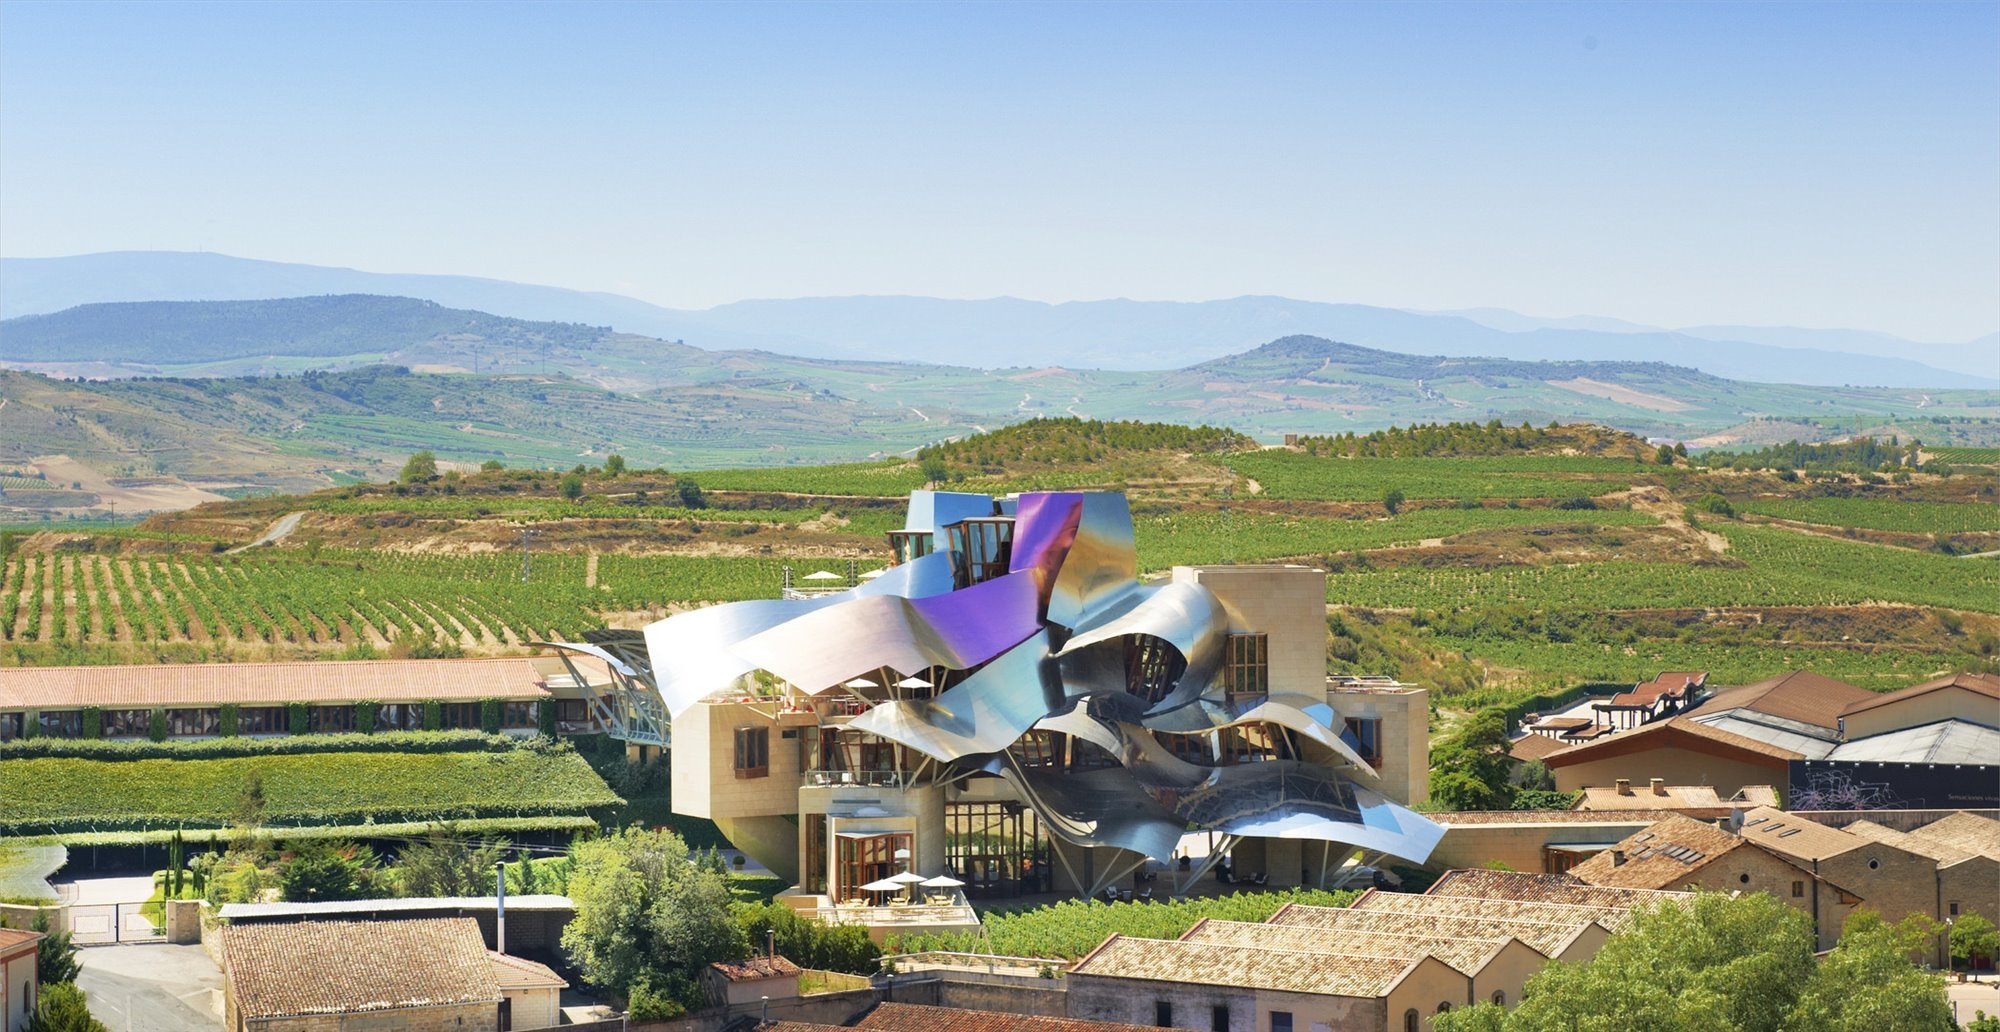 Hotel Marqués de Riscal, de Frank Gehry (Álava, Rioja Alavesa)